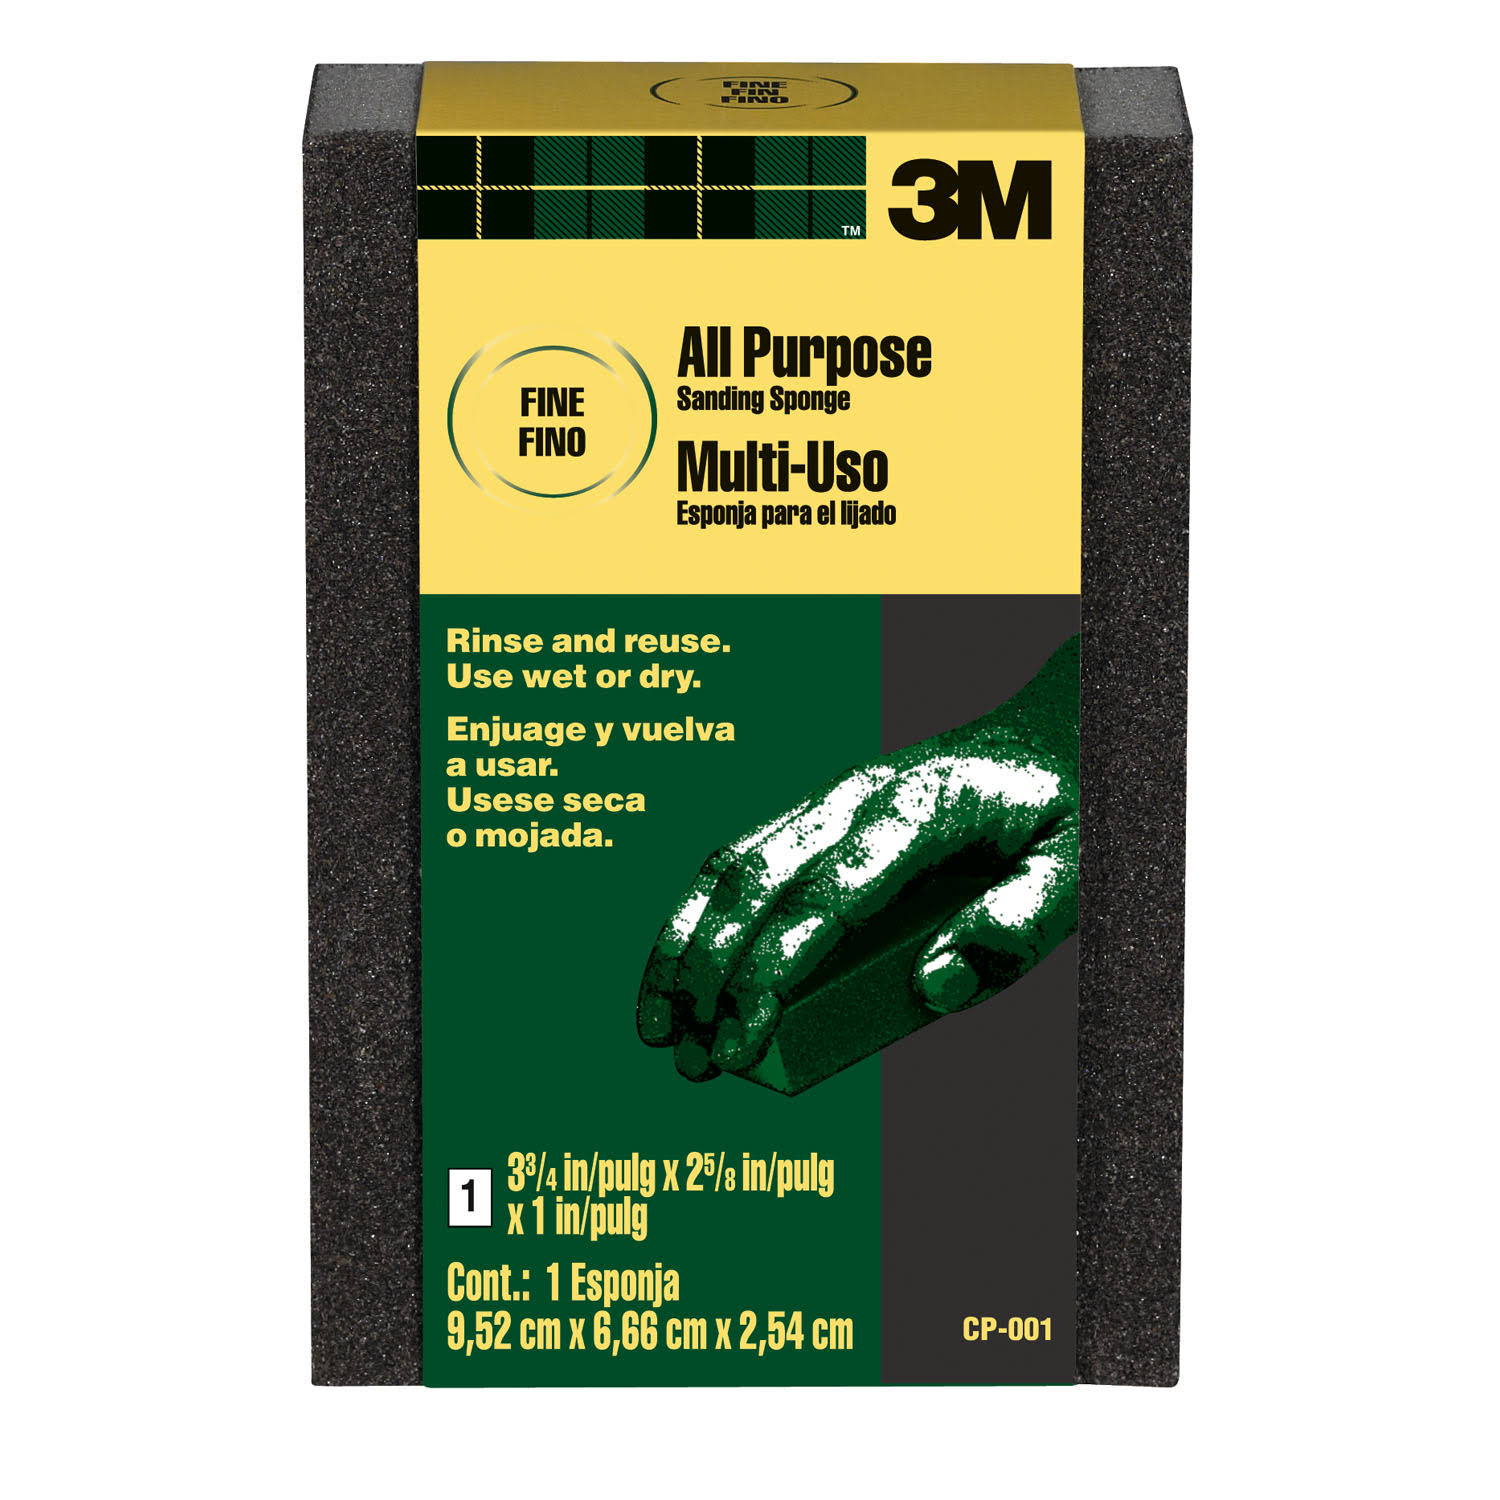 3M All-Purpose Sanding Sponge - Fine Grit